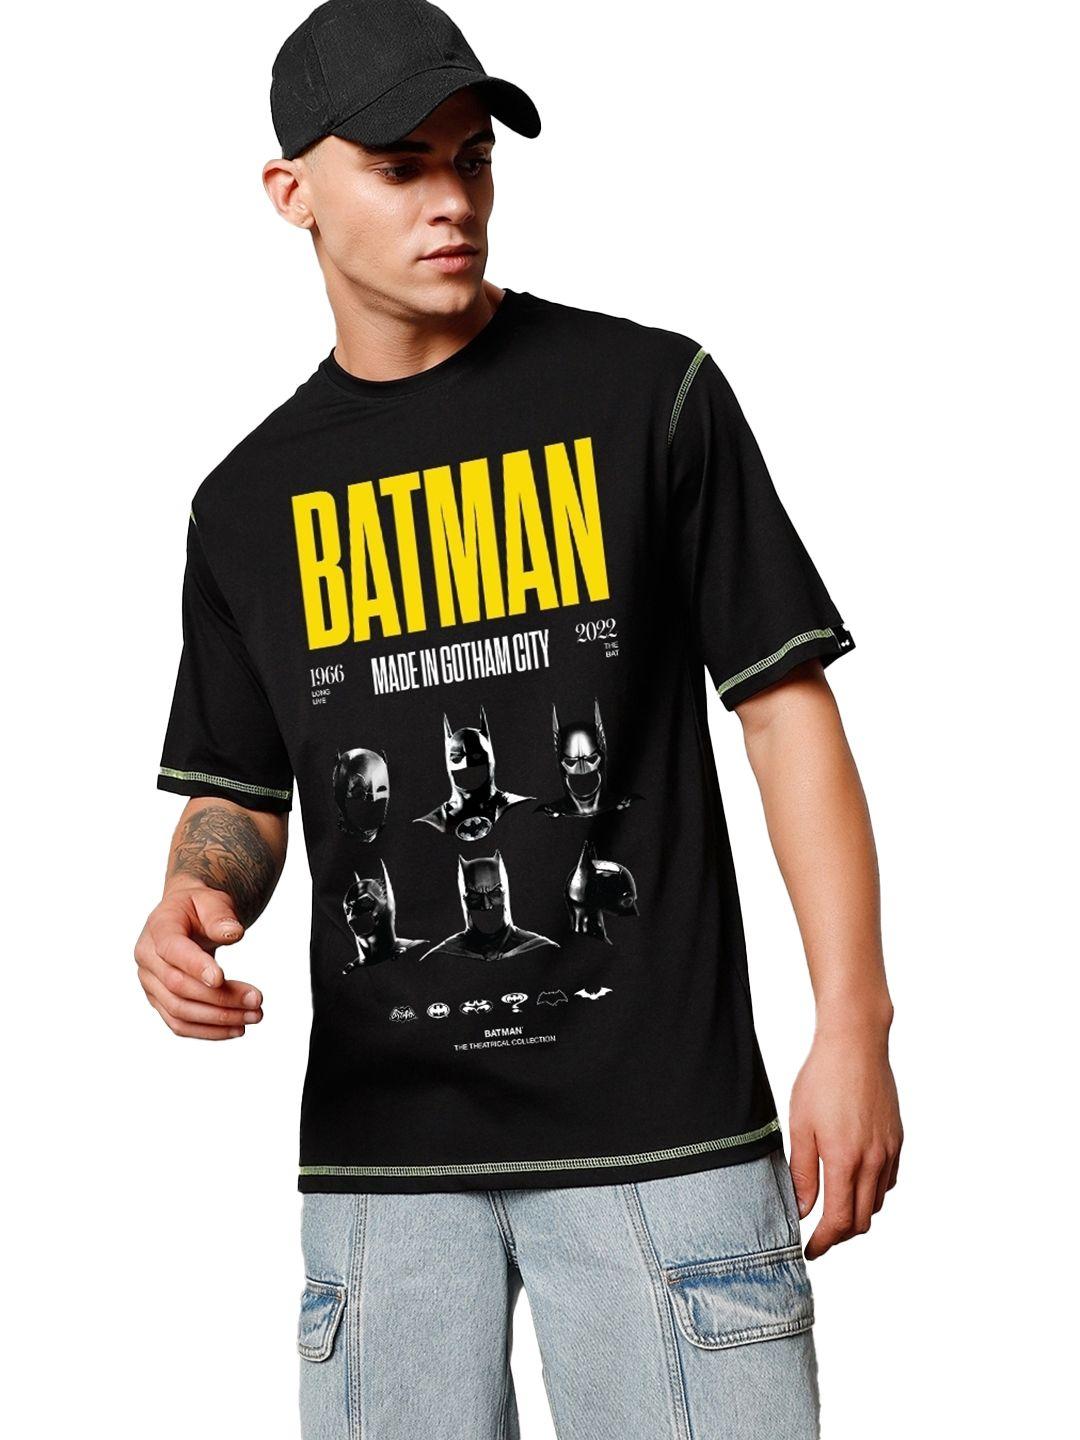 bewakoof batman superhero printed cotton t-shirt